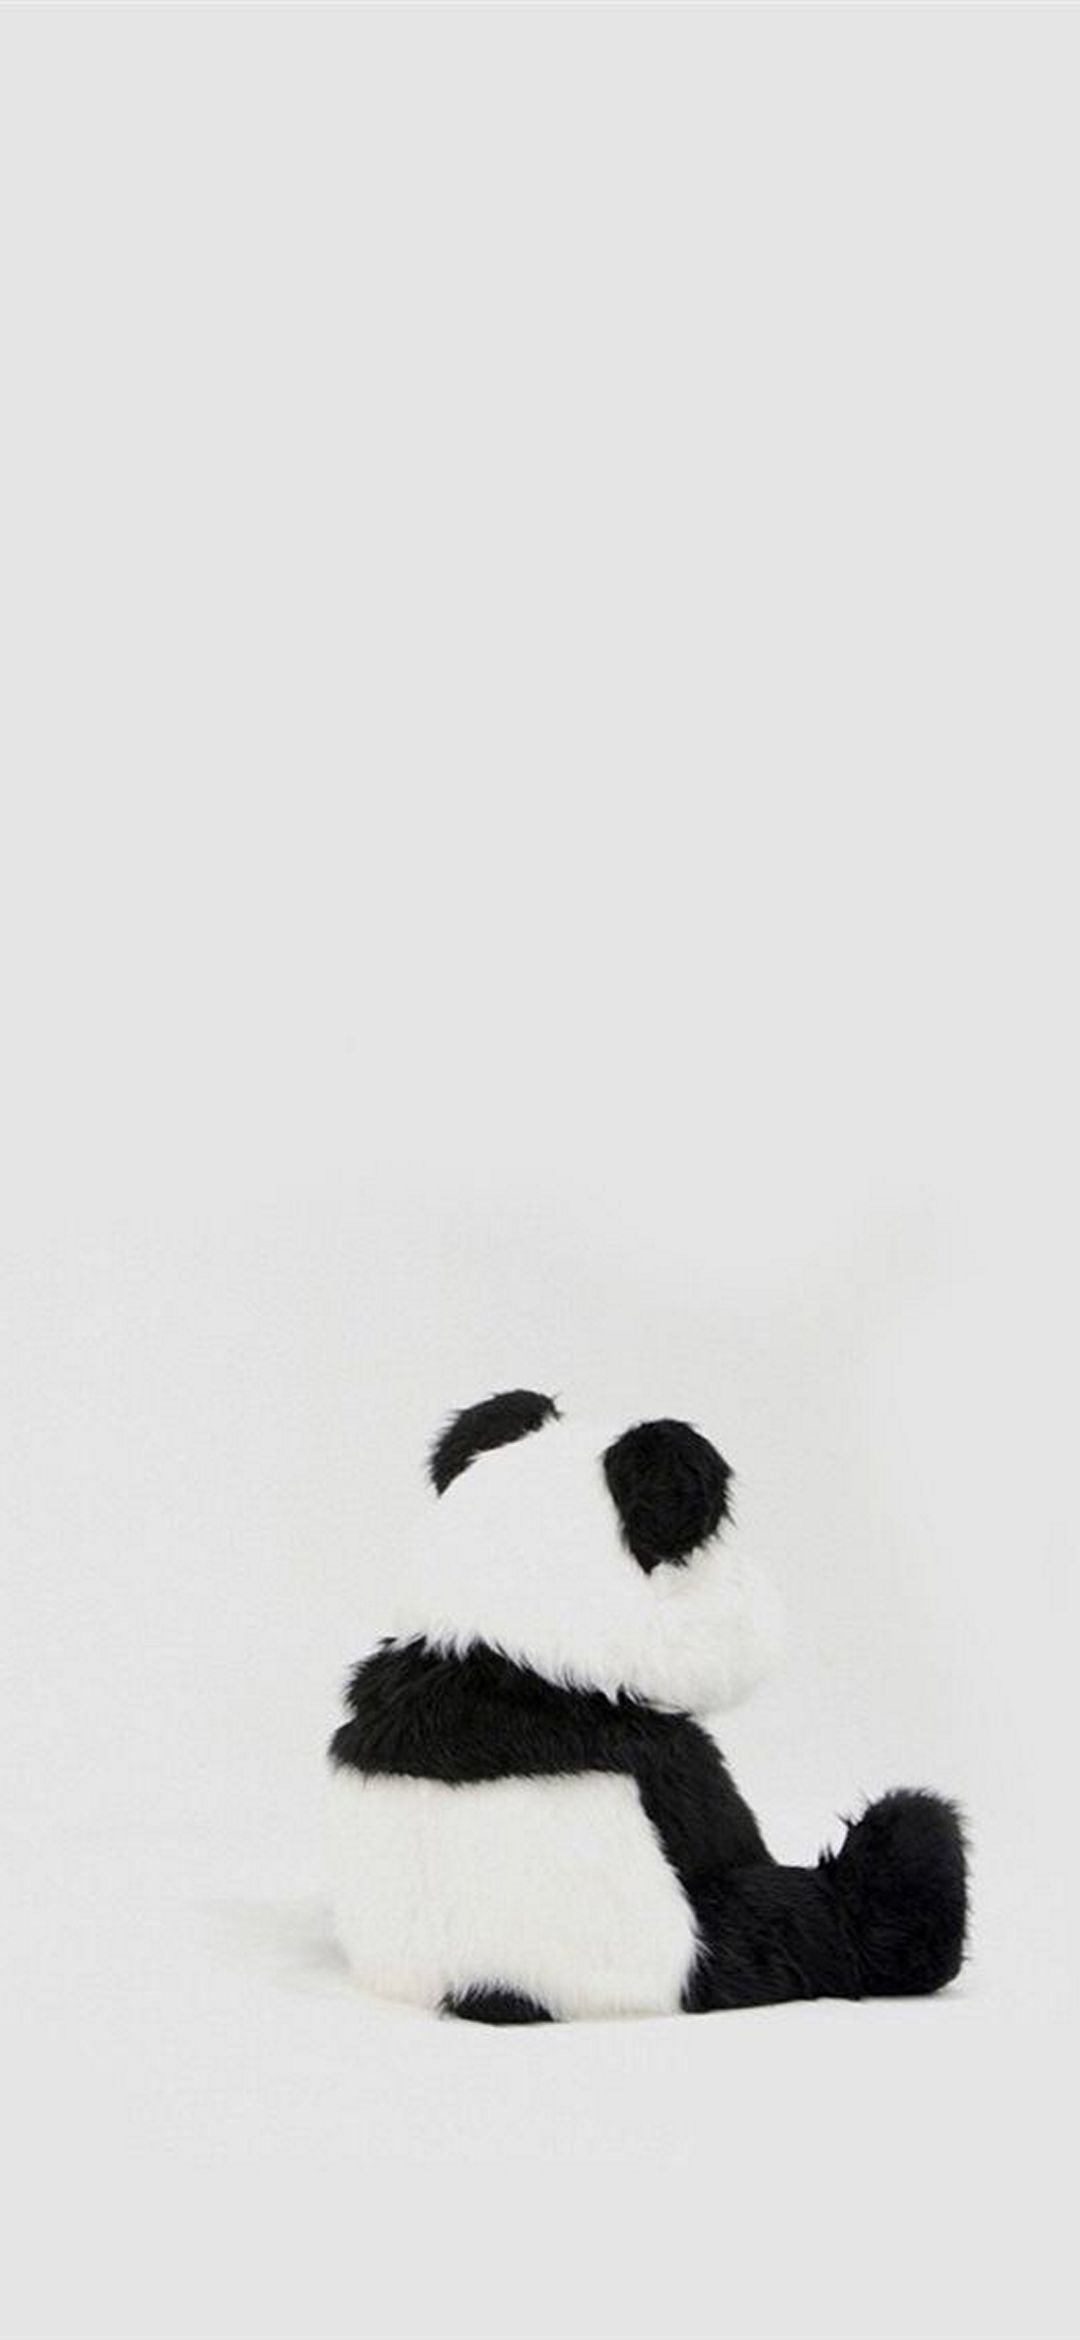 Sad Panda Black and White OnePlus 8 Wallpaper Free